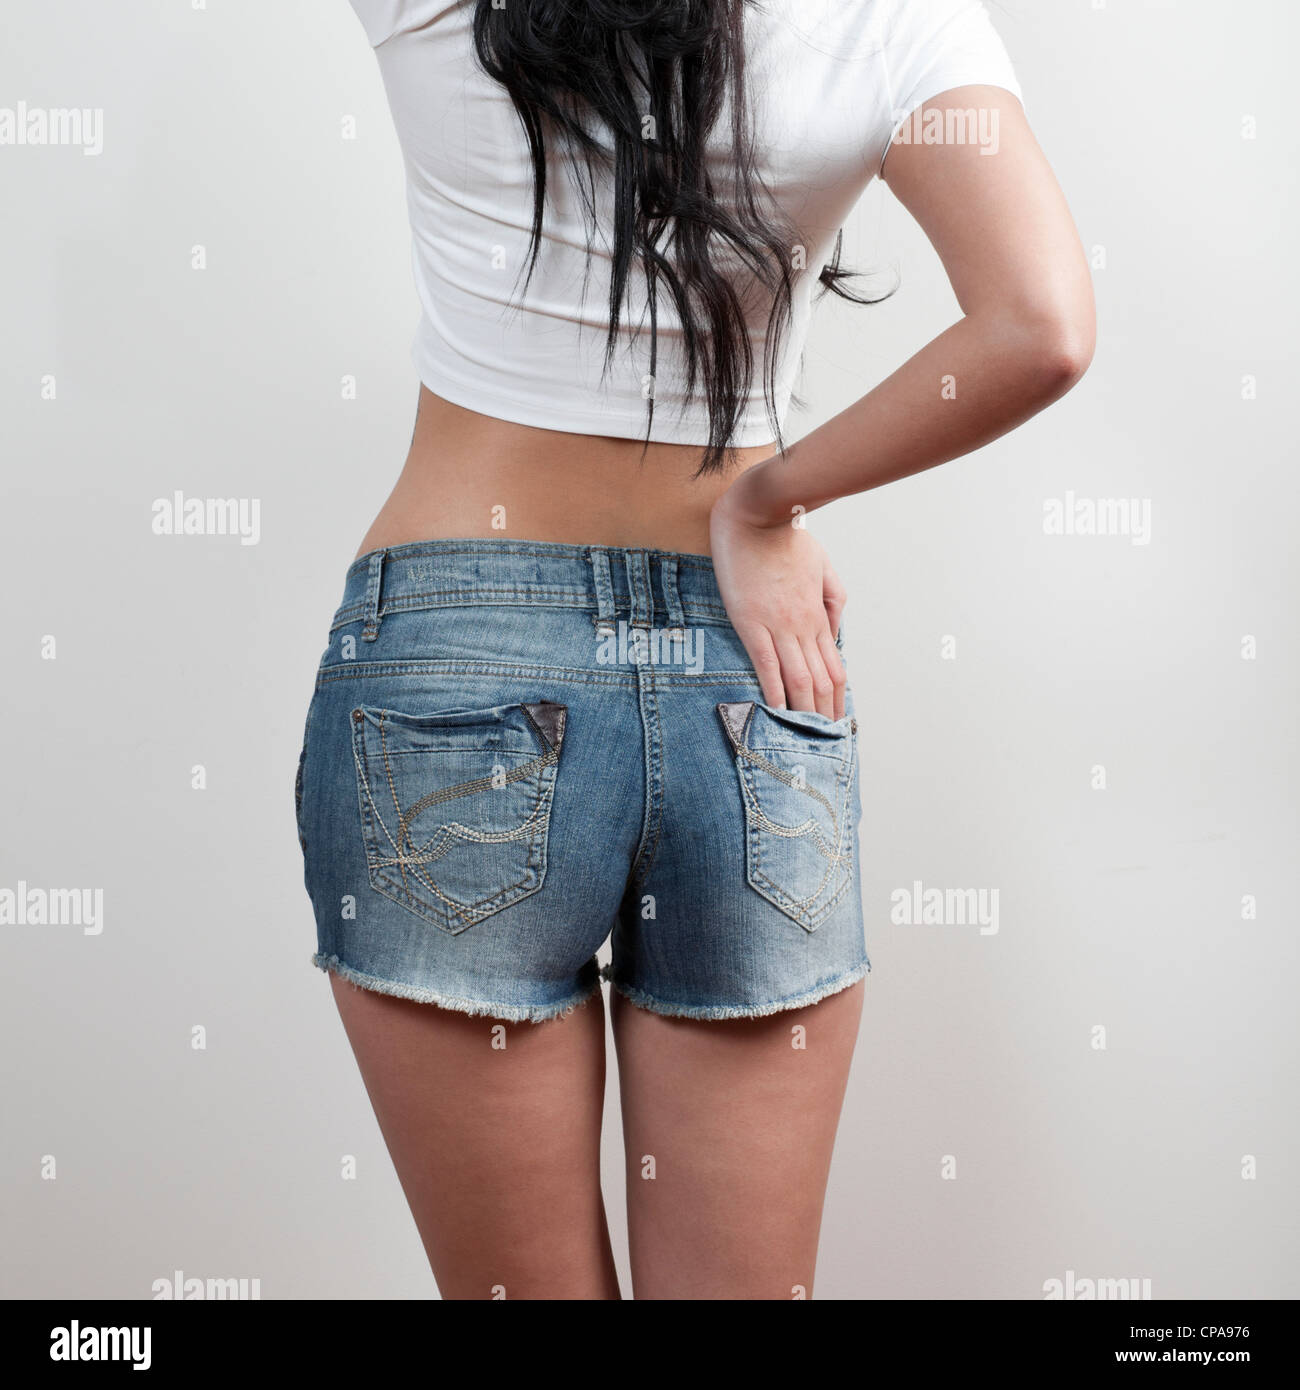 Woman wearing denim shorts Stock Photo